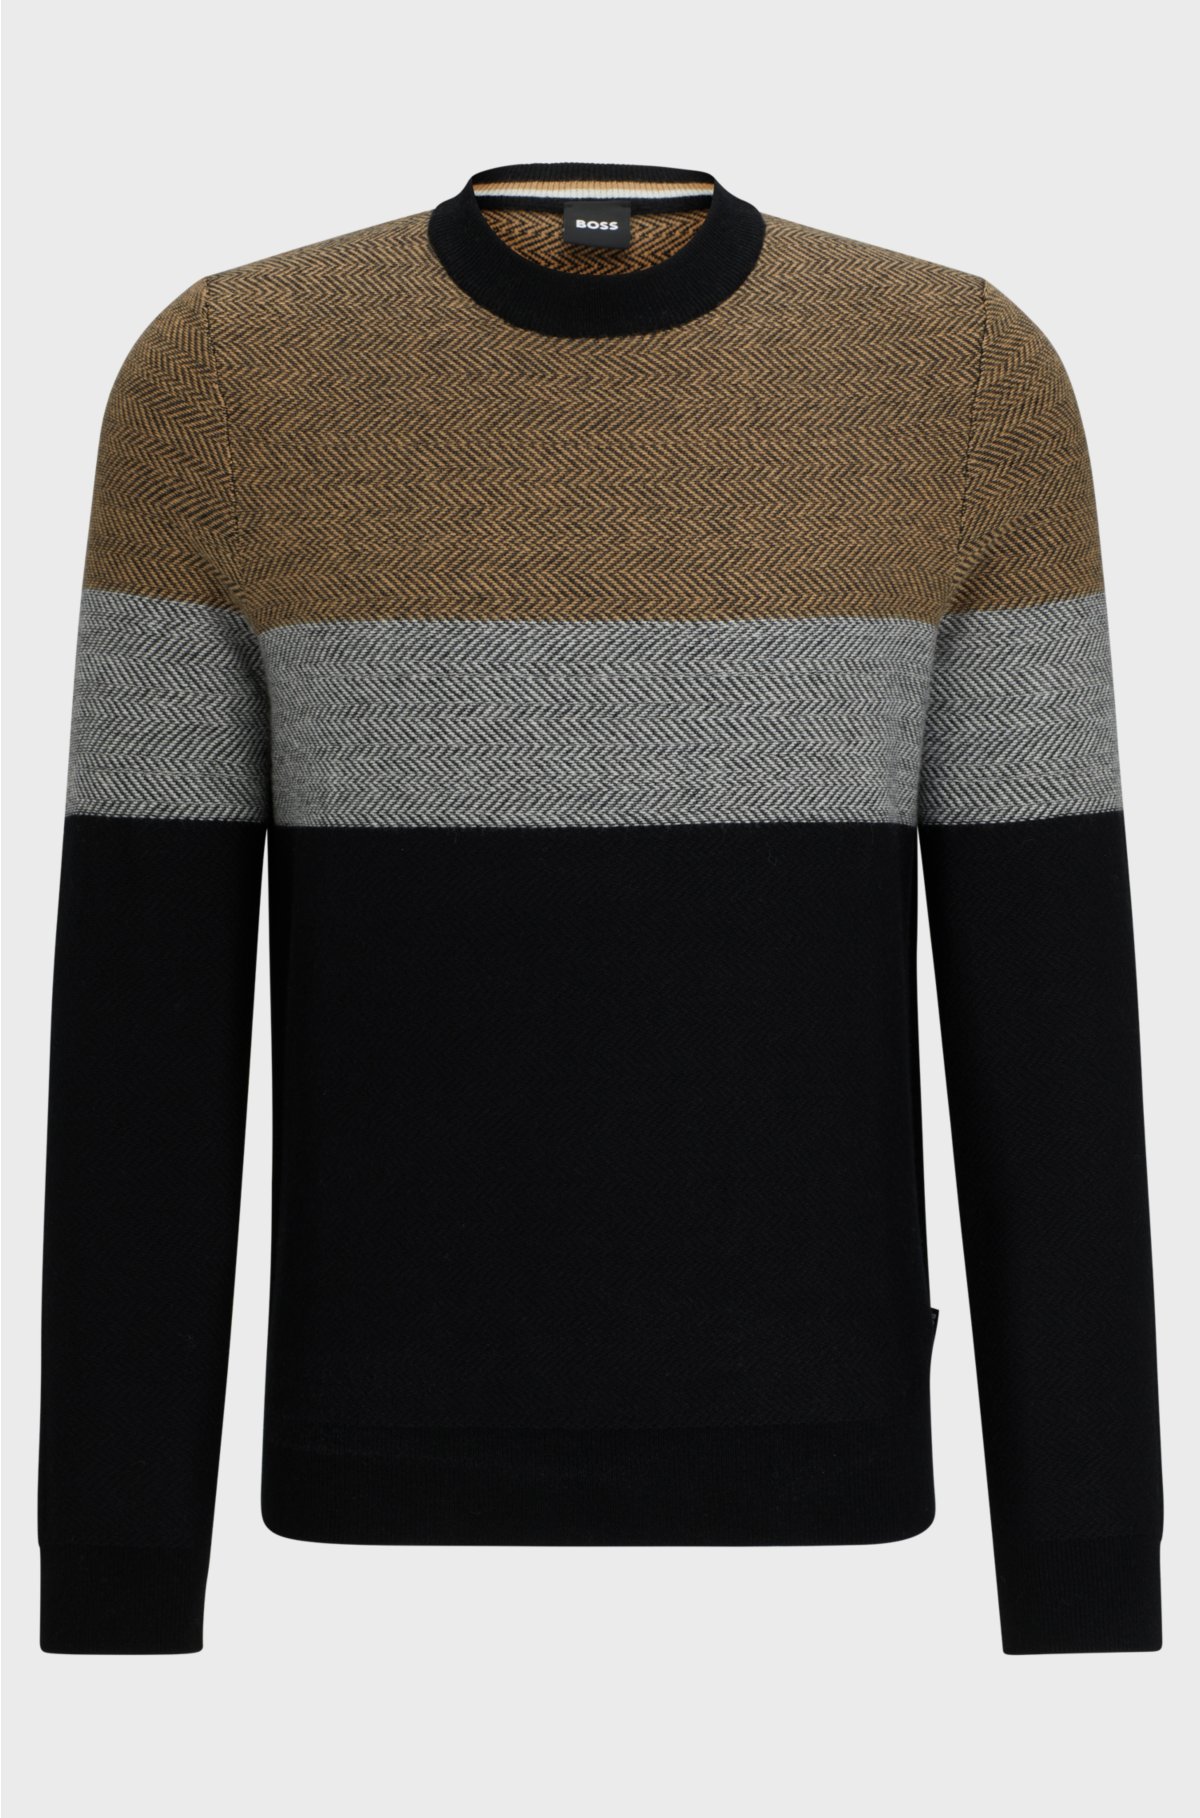 Herringbone-structured sweater in virgin wool and cotton, Black